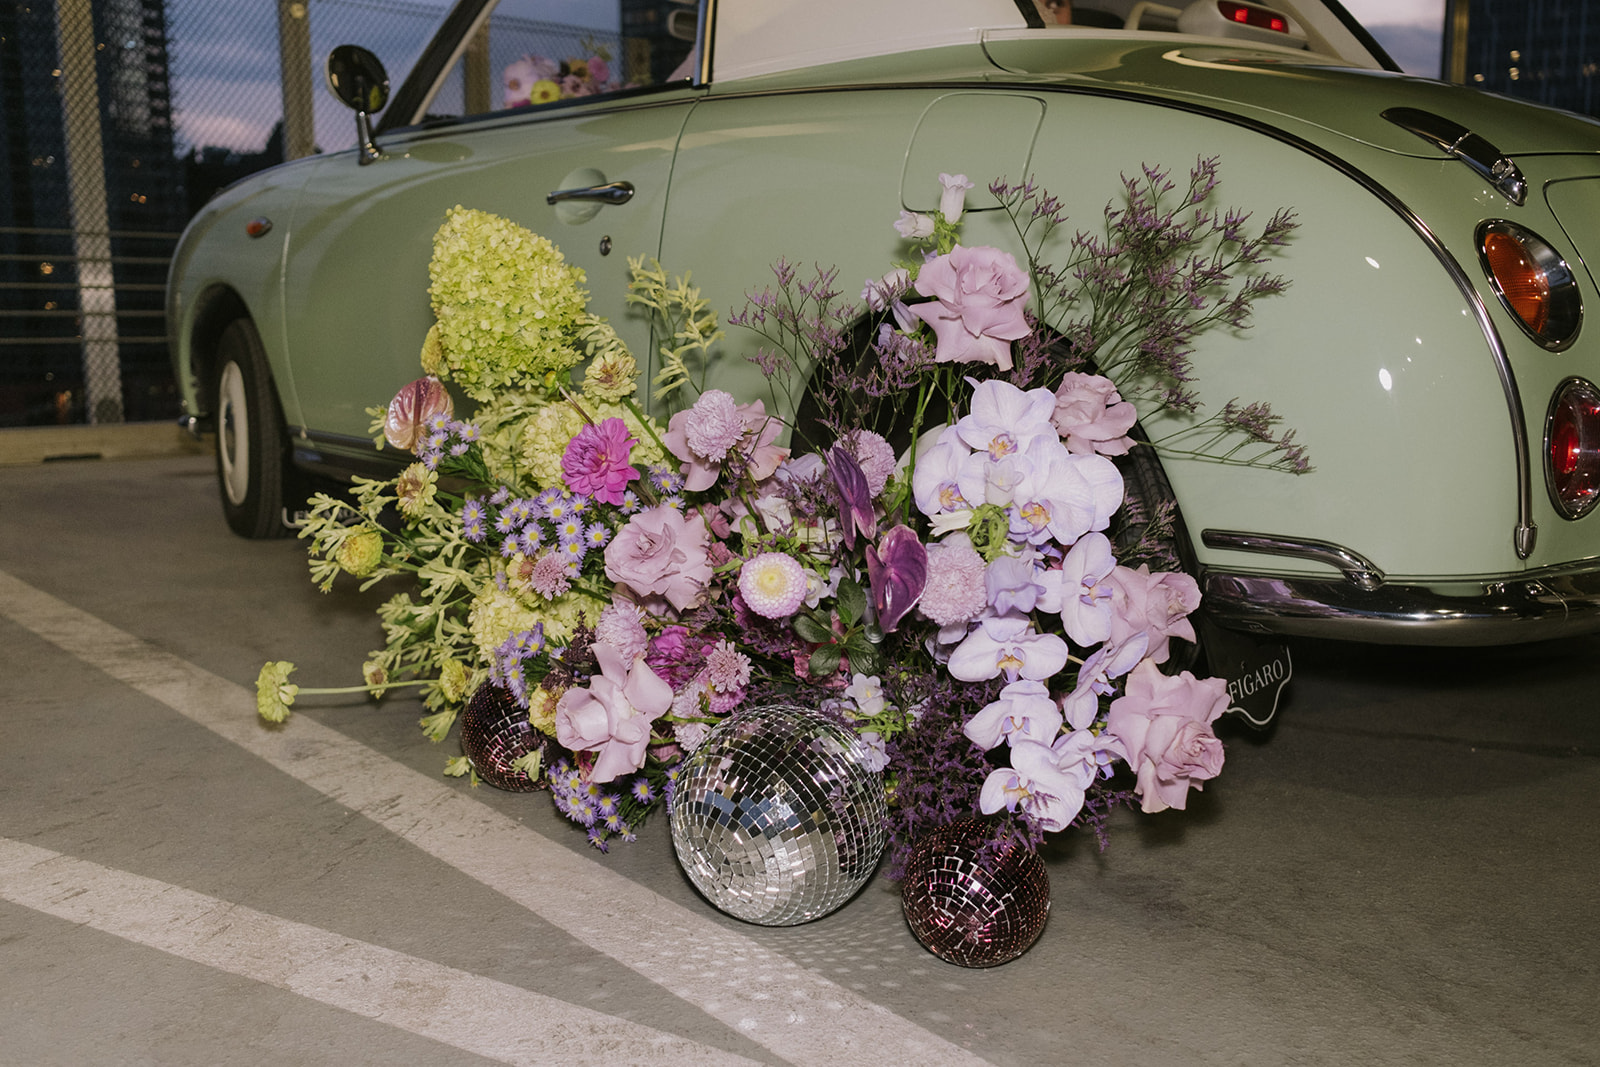 disco balls, vintage car, and purple flowers for retro elopement inspiration